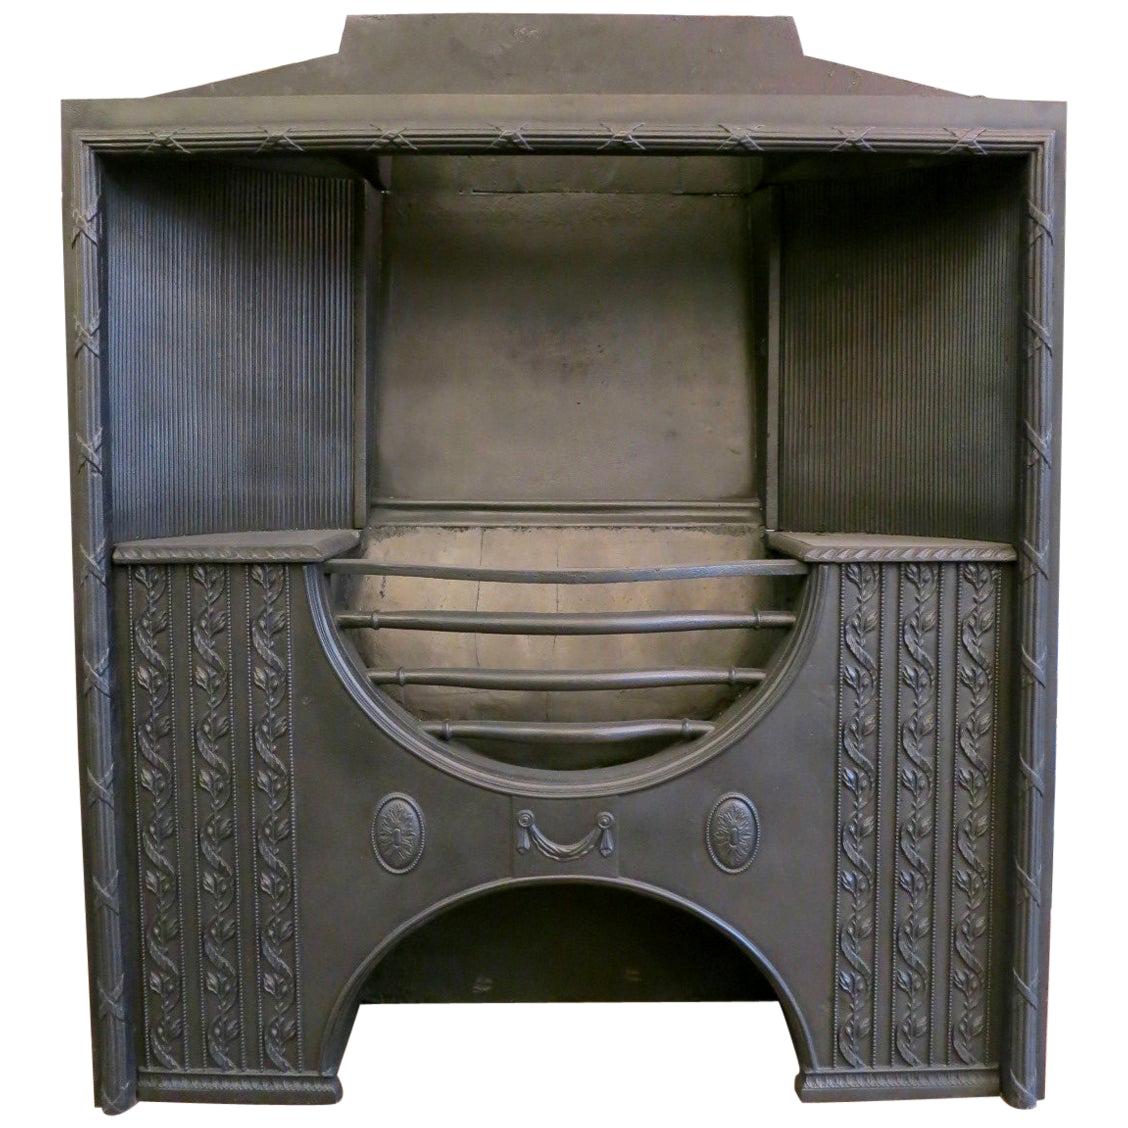 Antique Carron Foundry 19th Century Register Fire  Grate